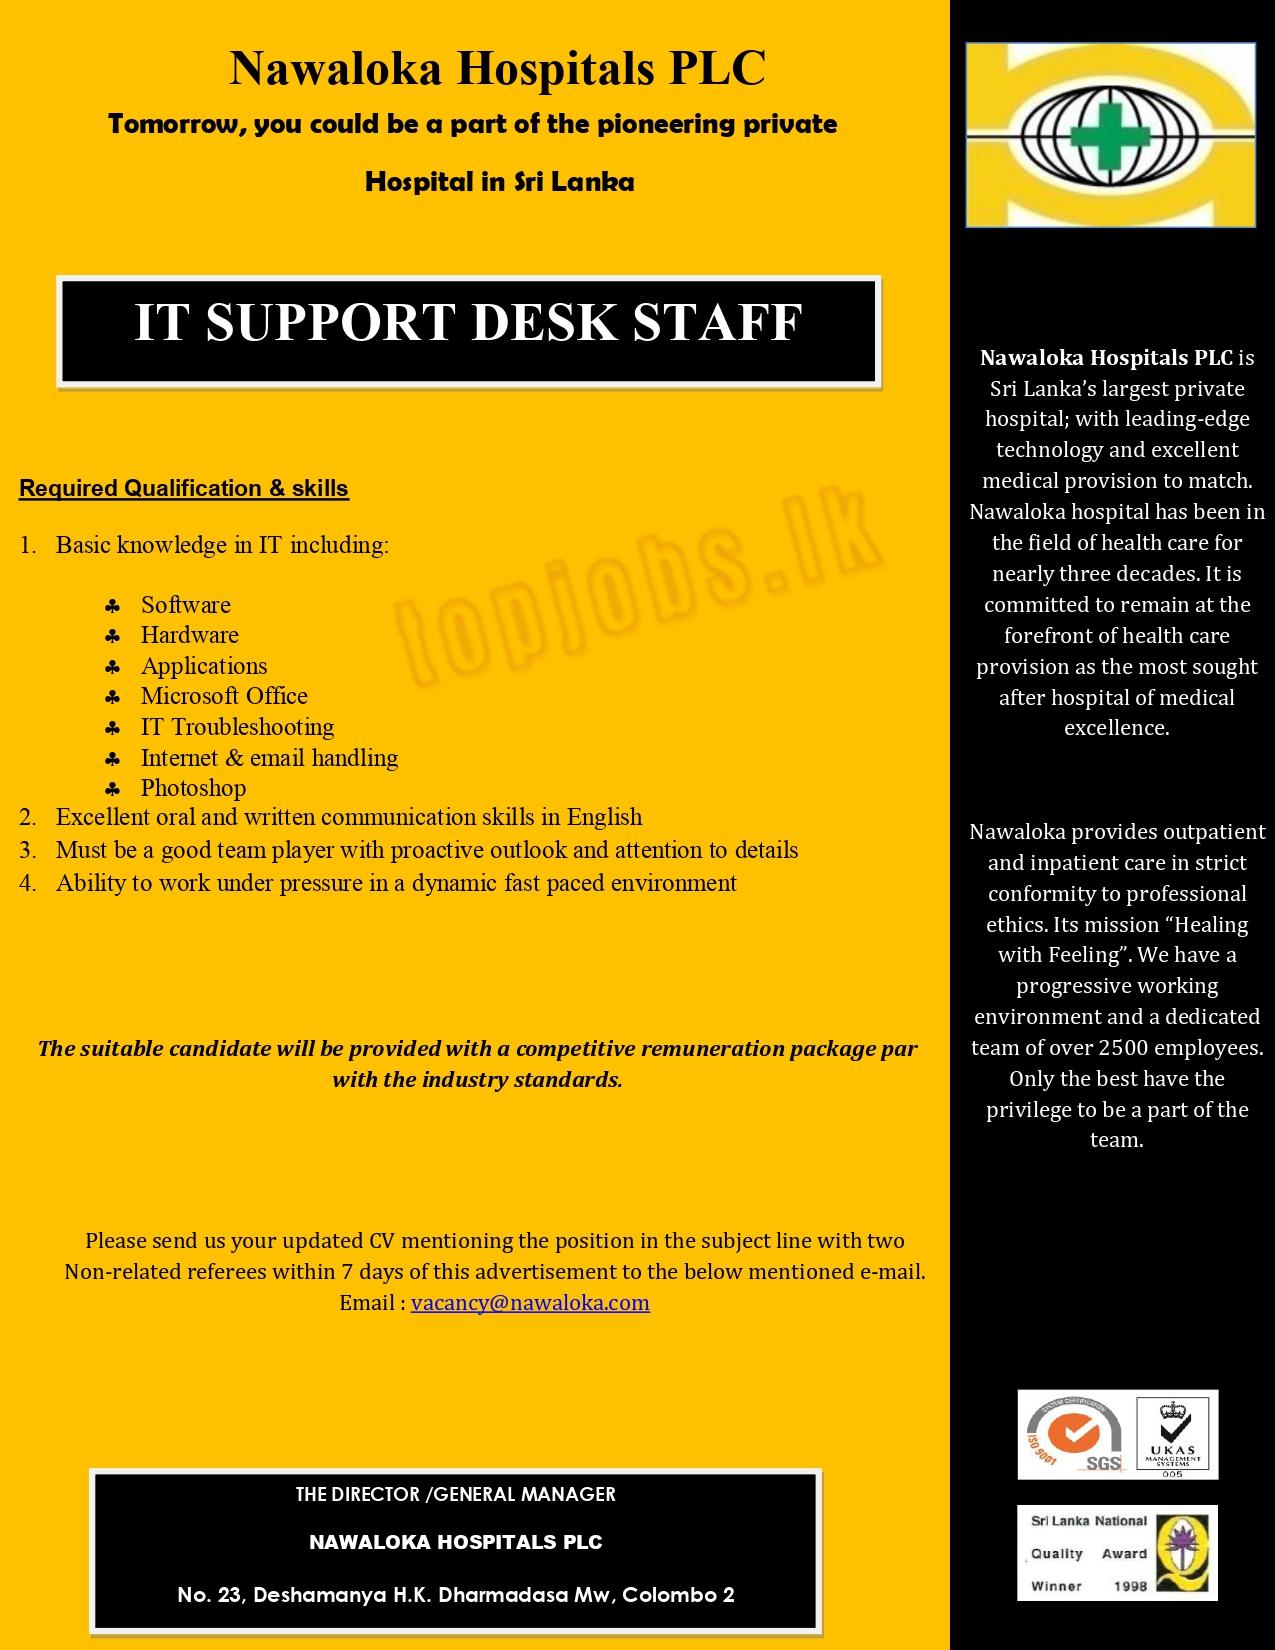 IT Support Desk Staff